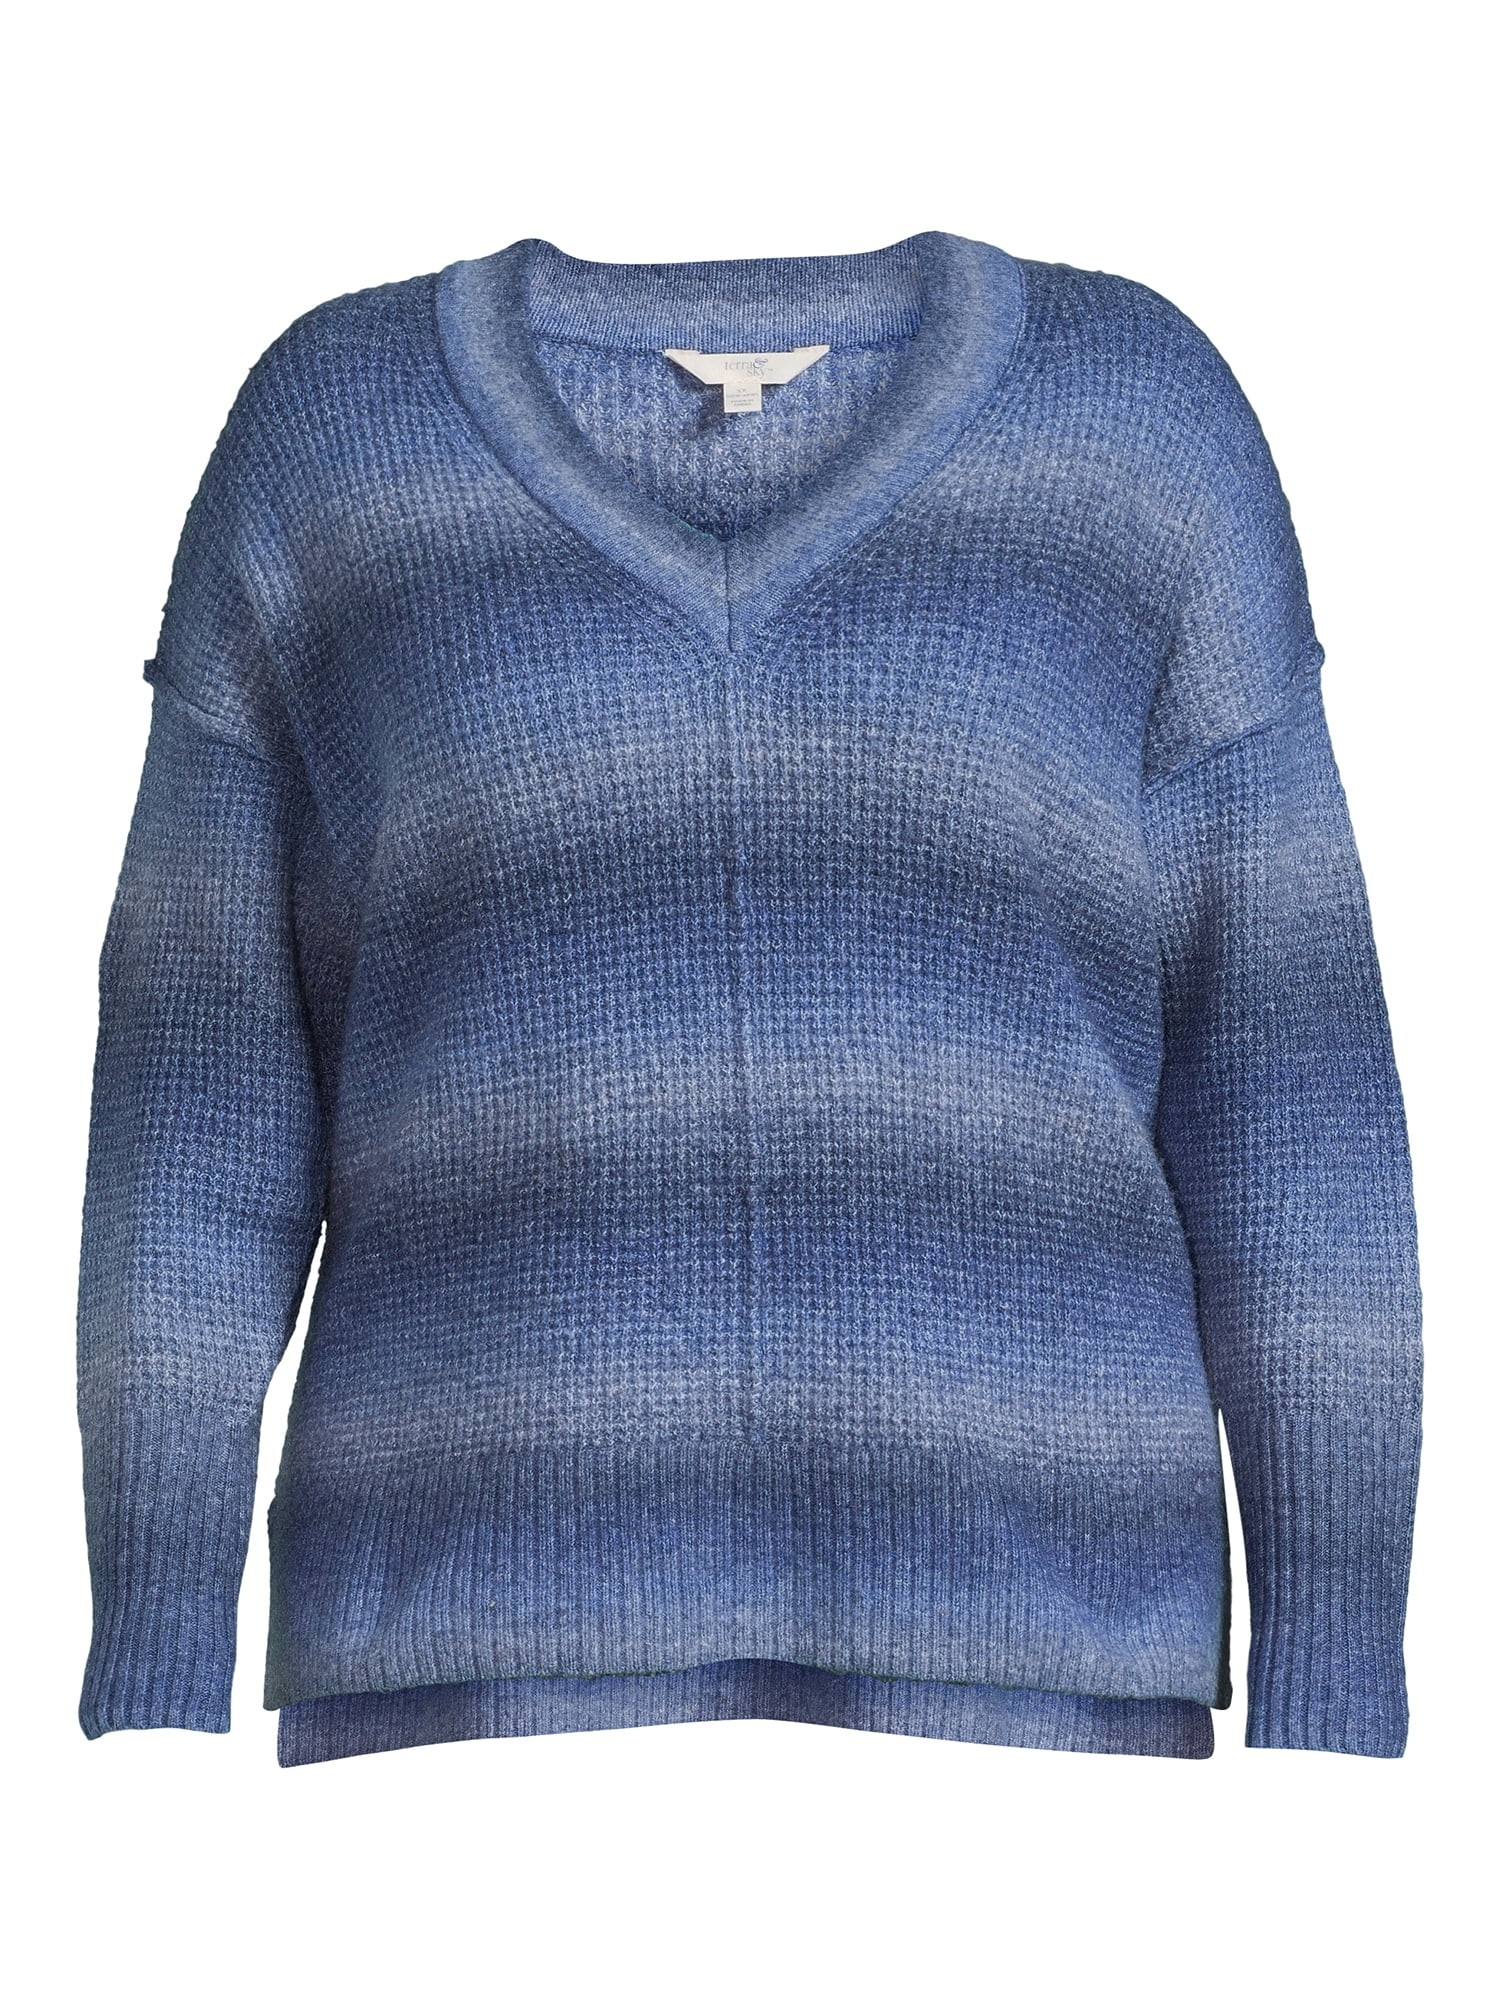 Terra & Sky Women's Plus Size Eyelash Knit Pullover Sweater